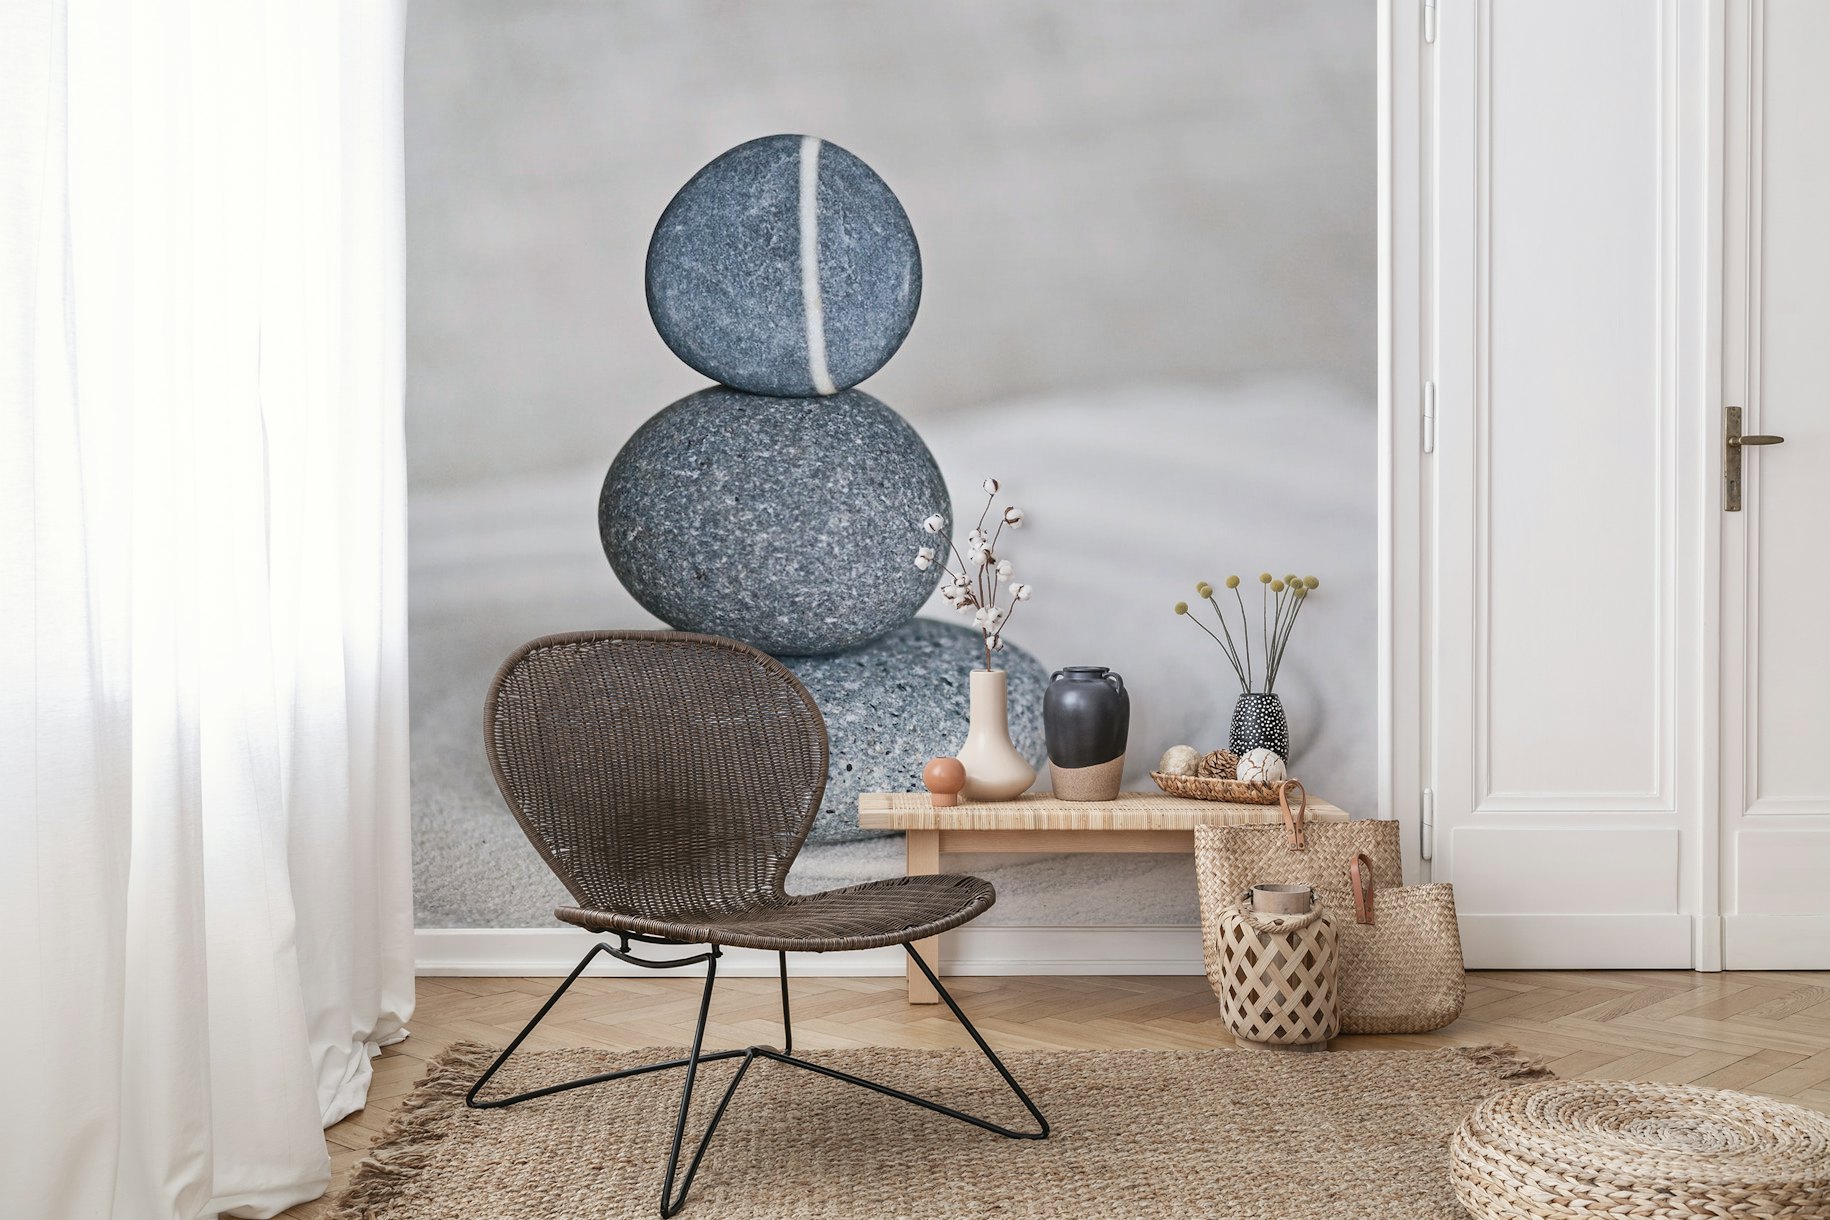 Balanced Stone Zen Style wallpaper